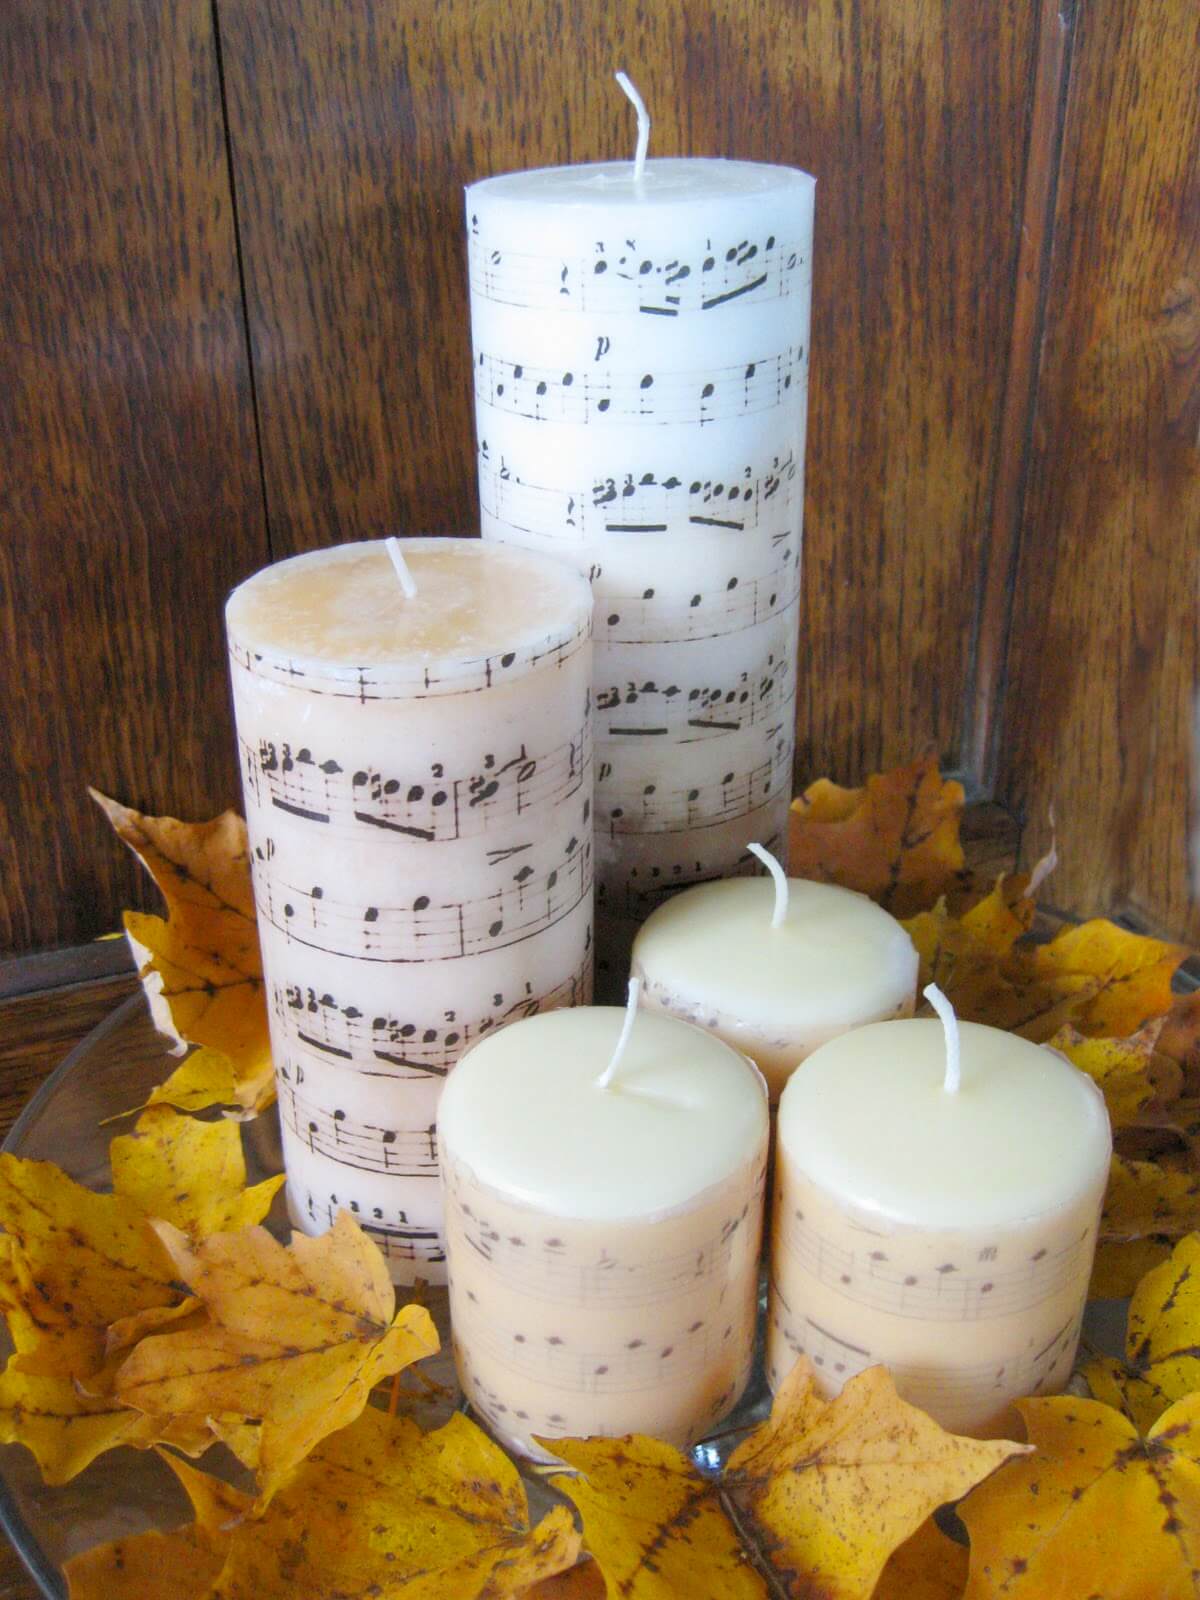 15 decorated candle ideas homebnc.jpg